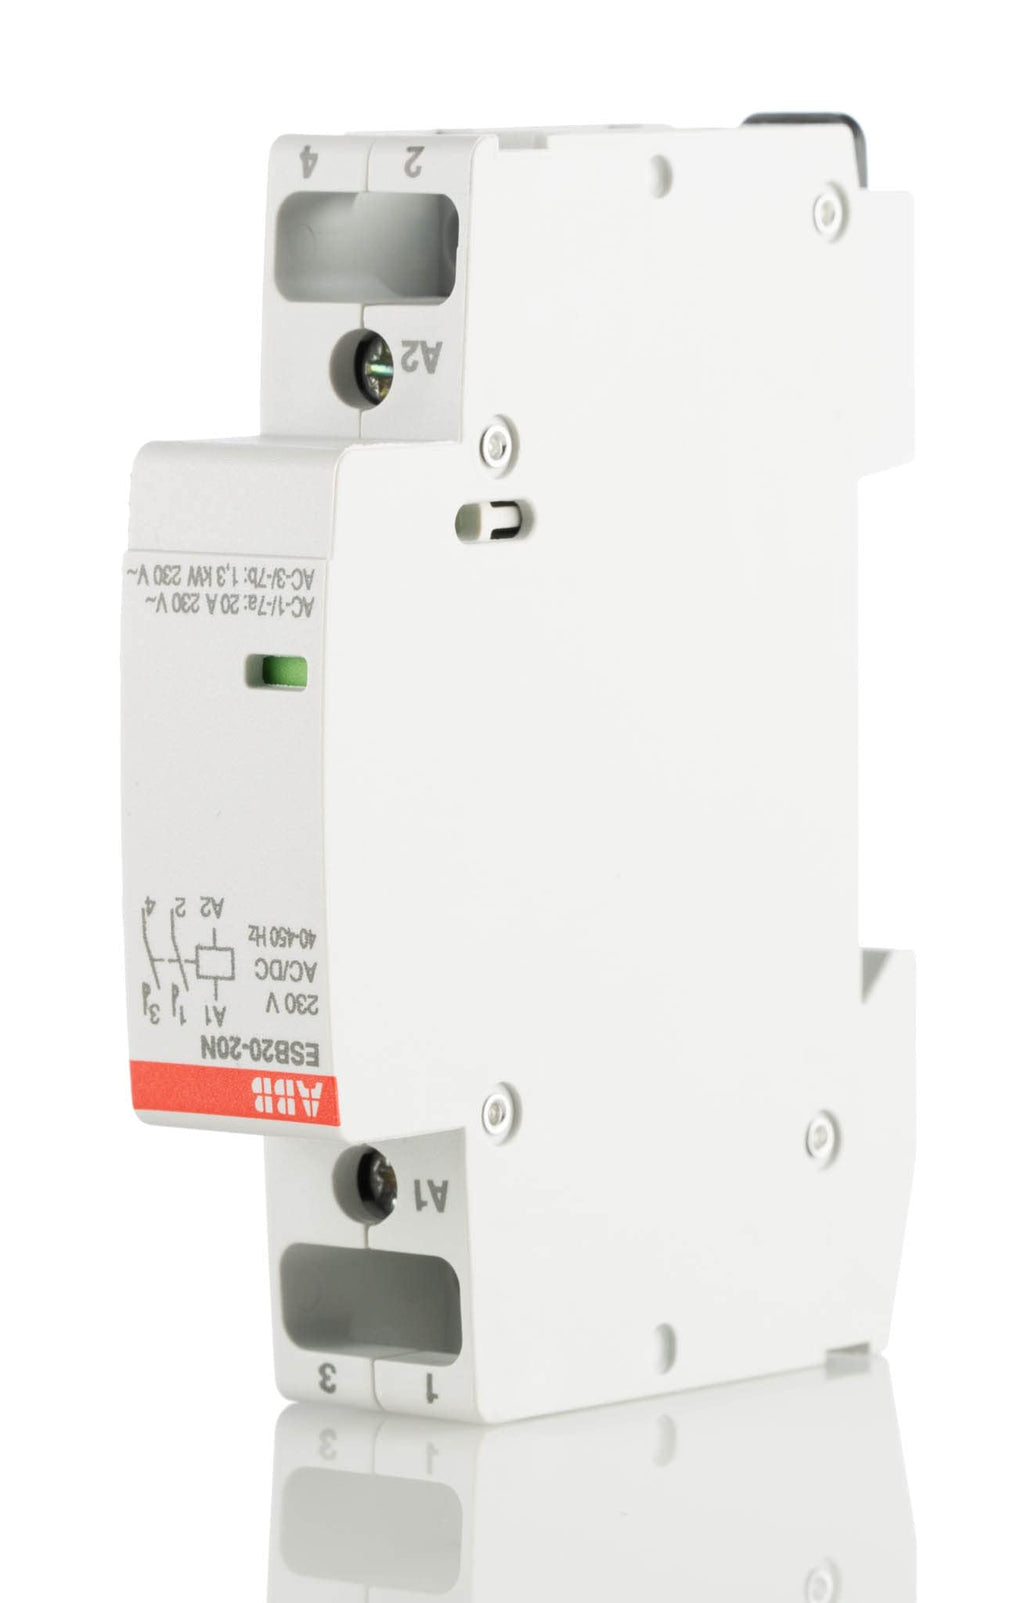  [AUSTRALIA] - ABB ESB20-20N-06 ESB power contactor / 230 V ac coil, 2-pole 2 NO contacts / 20 A, safety